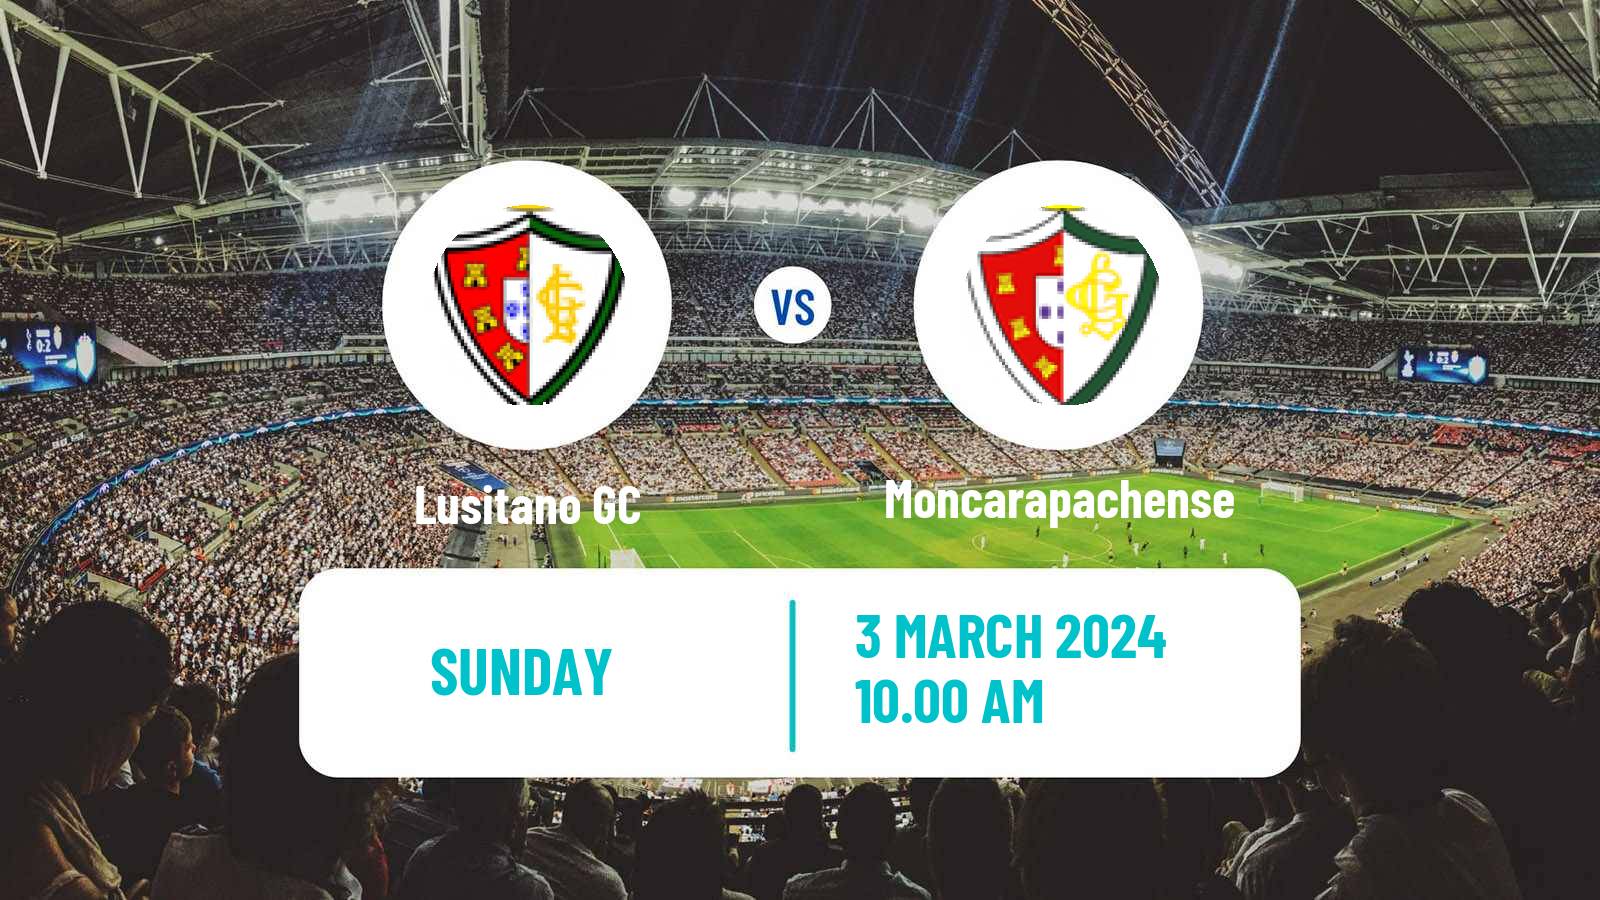 Soccer Campeonato de Portugal - Group D Lusitano GC - Moncarapachense